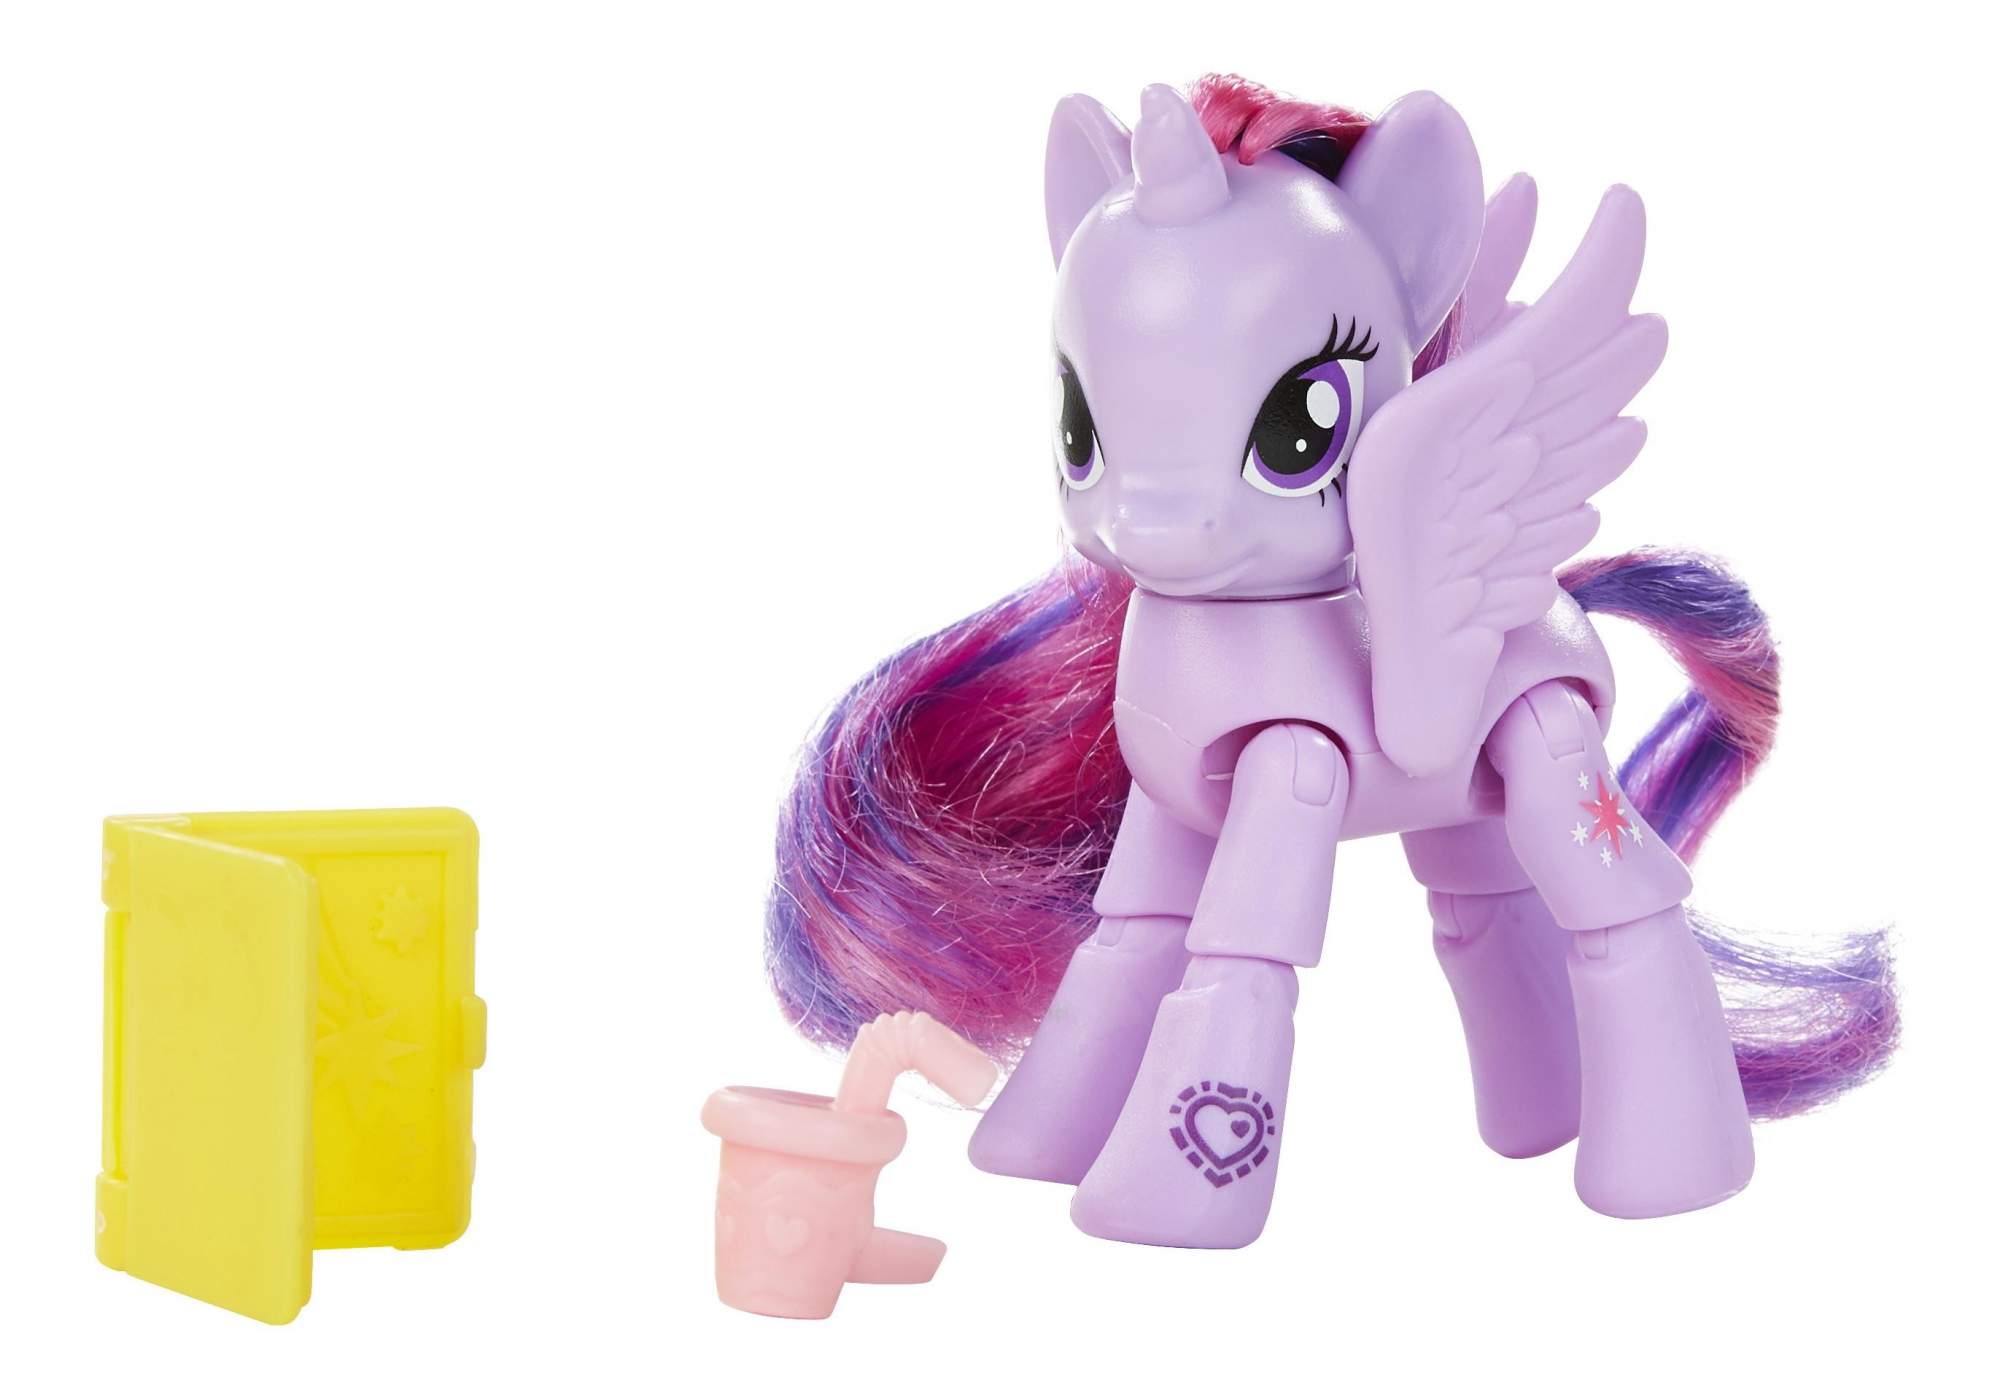 Pony friendship celebration. Игровой набор Hasbro Twilight Sparkle b5681. Твайлайт Спаркл игрушка пони. Фигурка Hasbro Twilight Sparkle b5386. Искорка Хасбро.